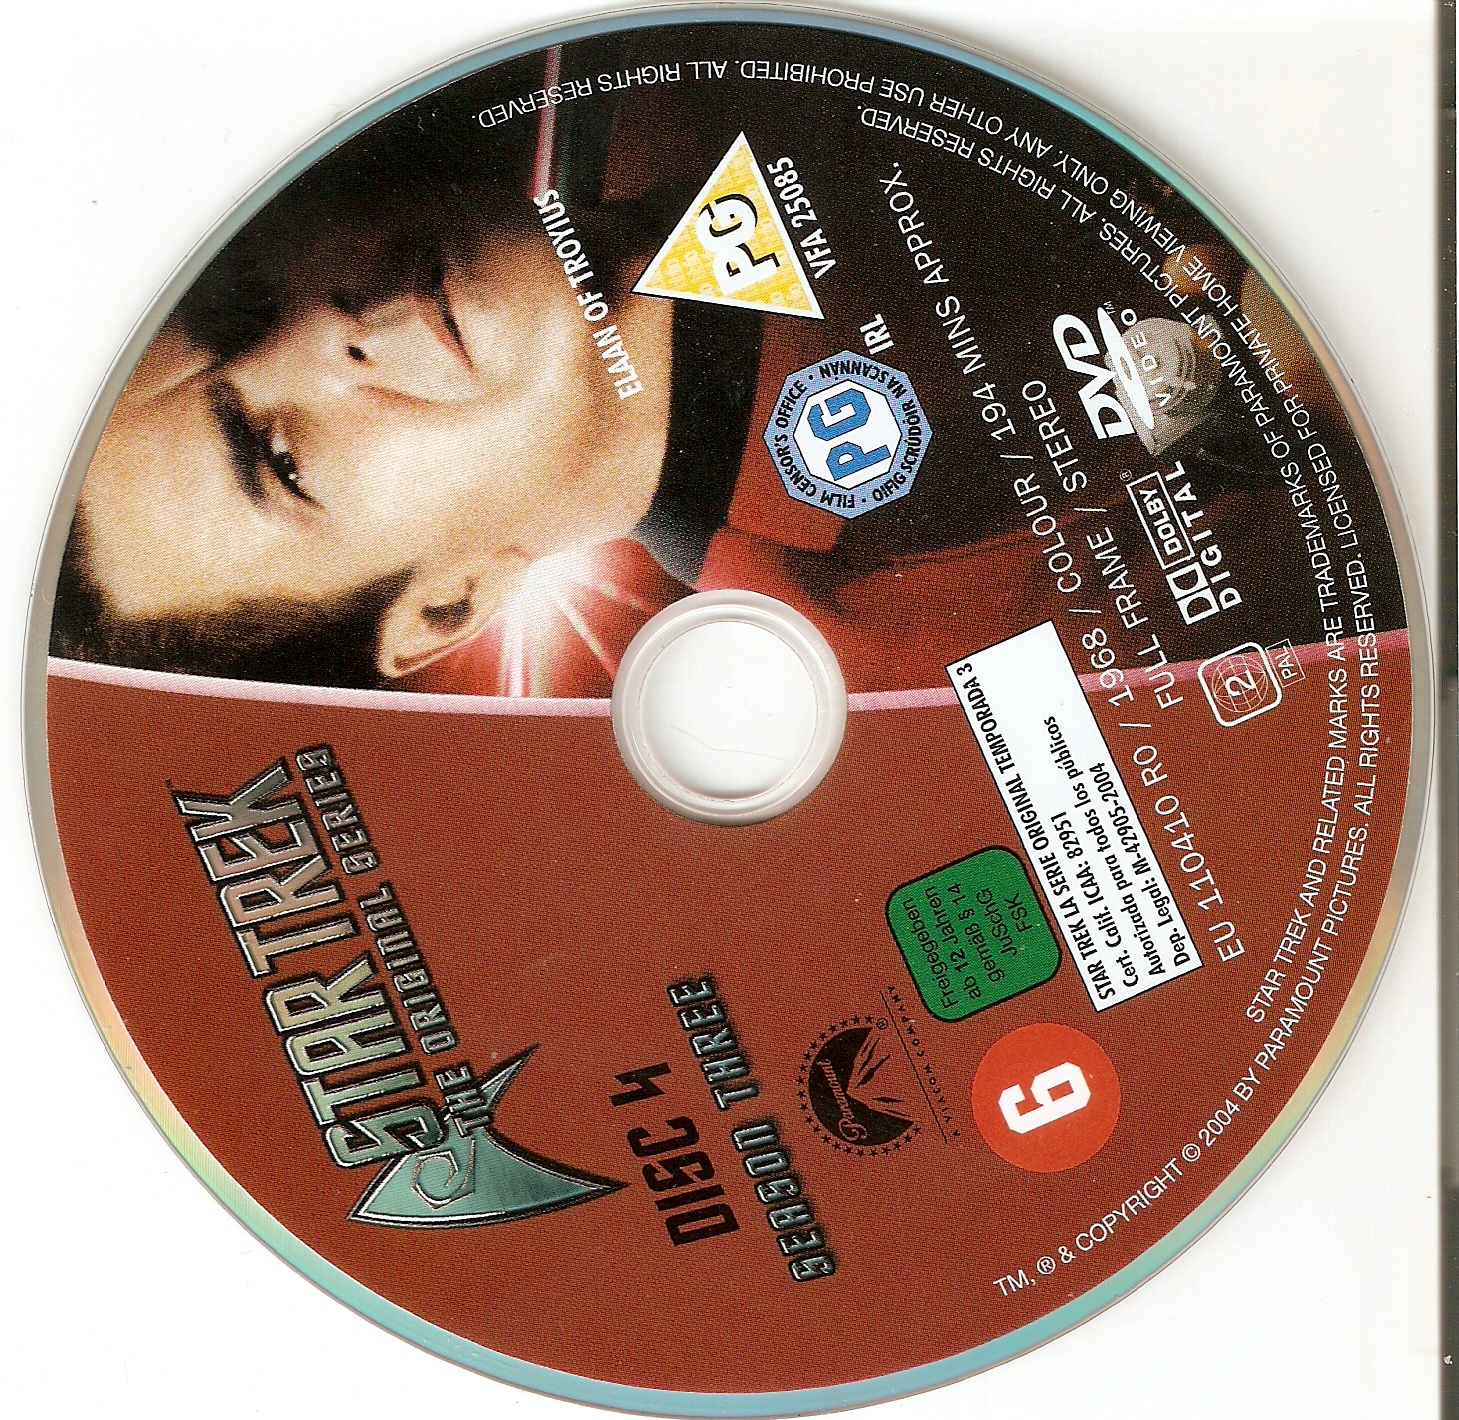 Star trek saison 3 DVD 4